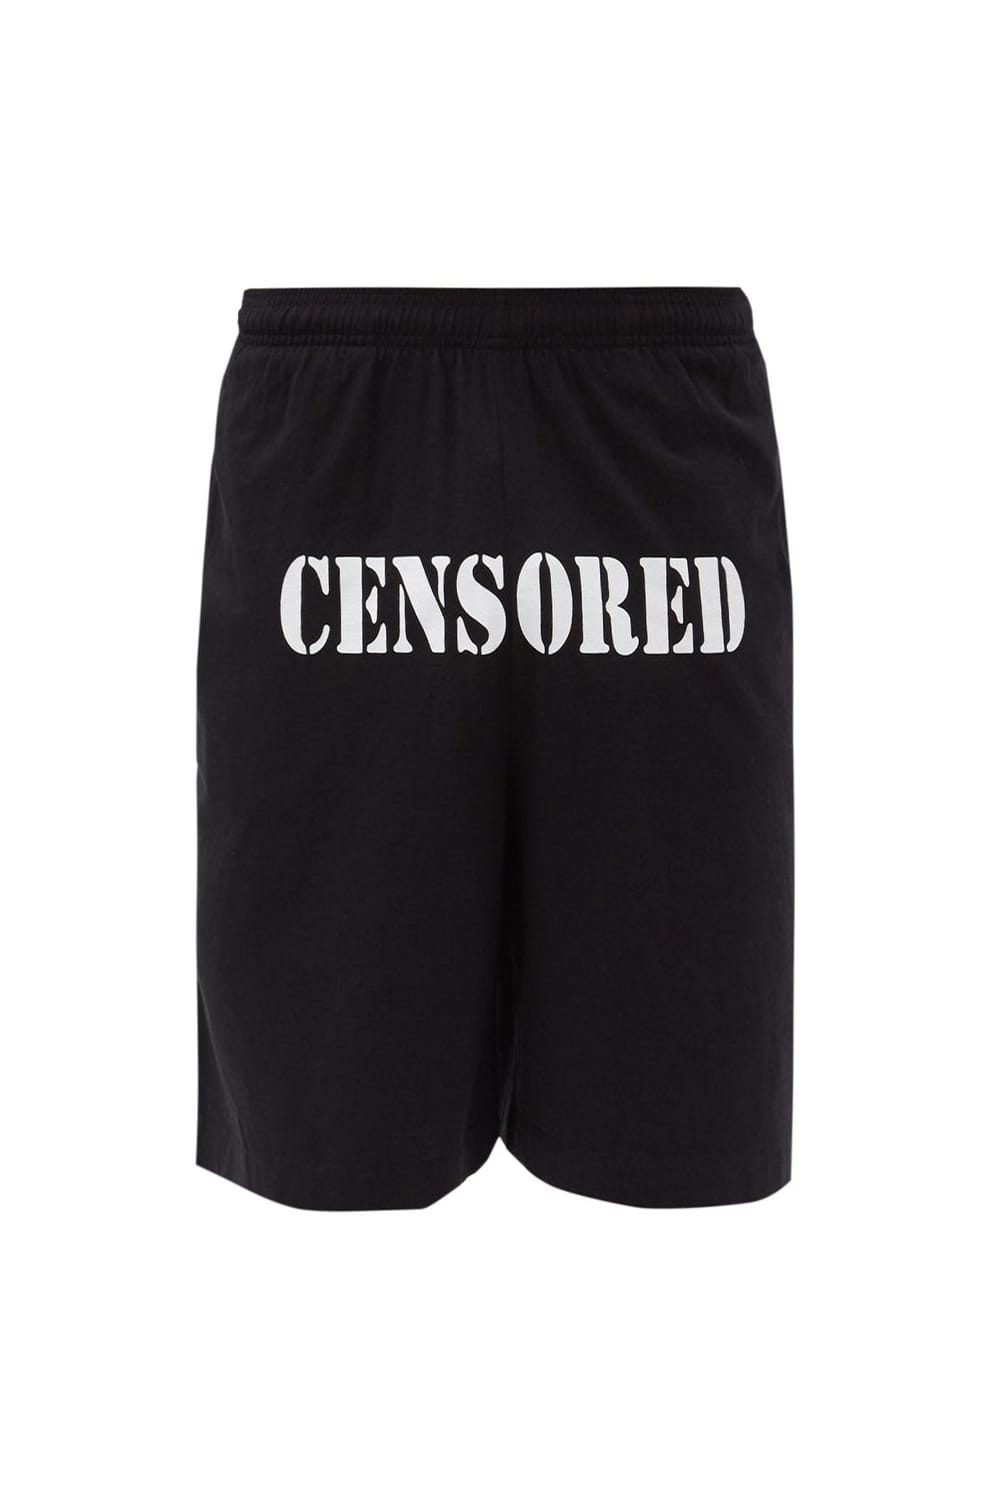 Vetements Censored-Print Cotton-Jersey Shorts Release | HYPEBEAST